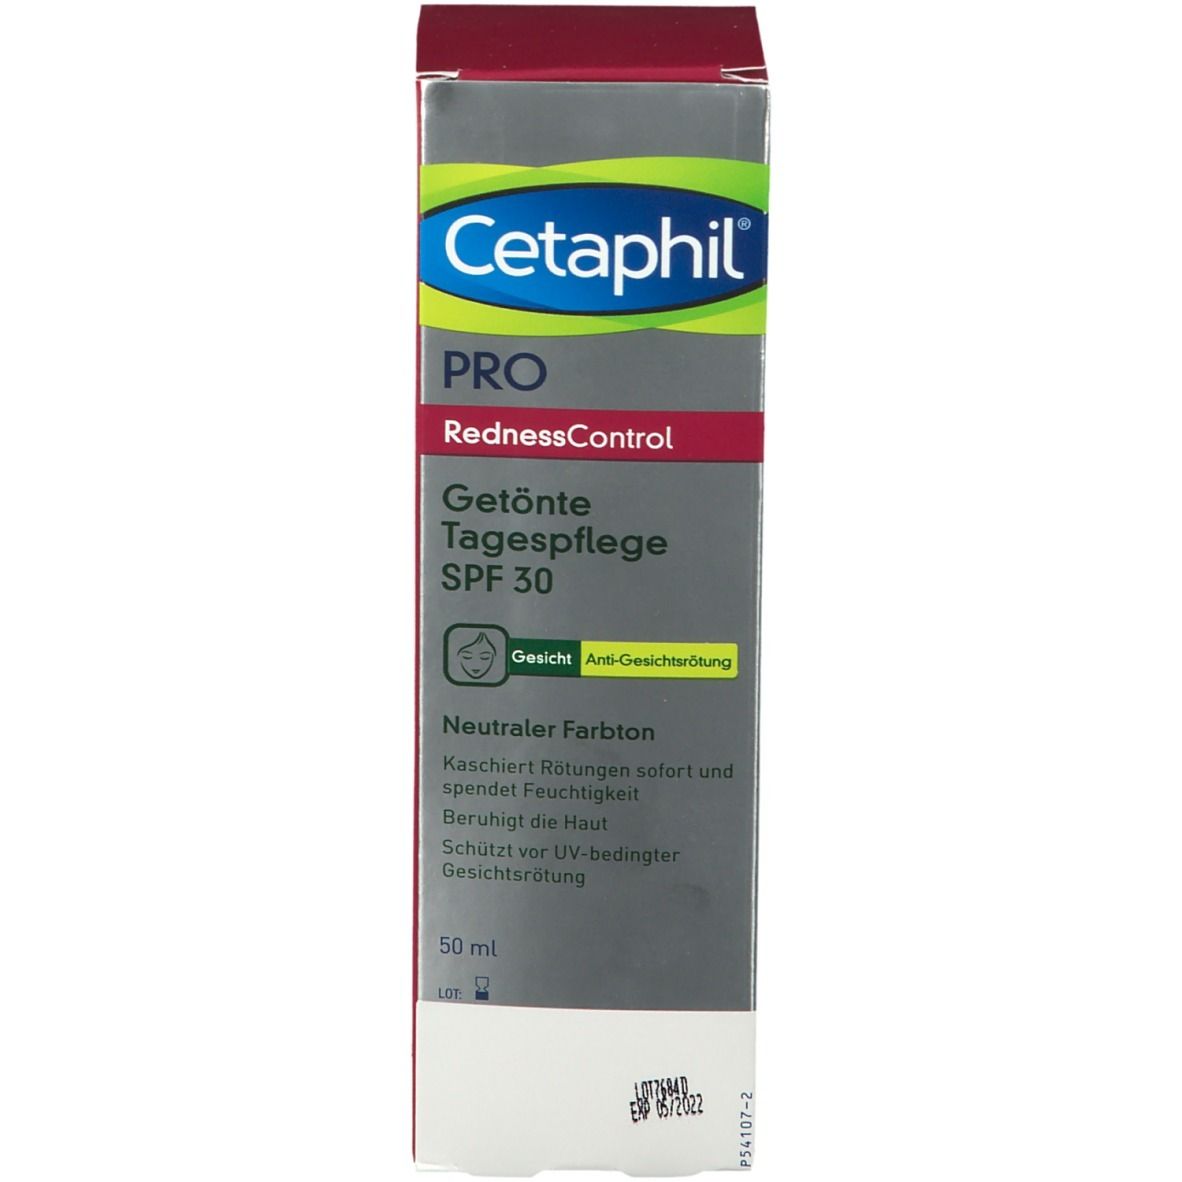 B. Cetaphil® Redness Control getönte Tagespflege SPF 30